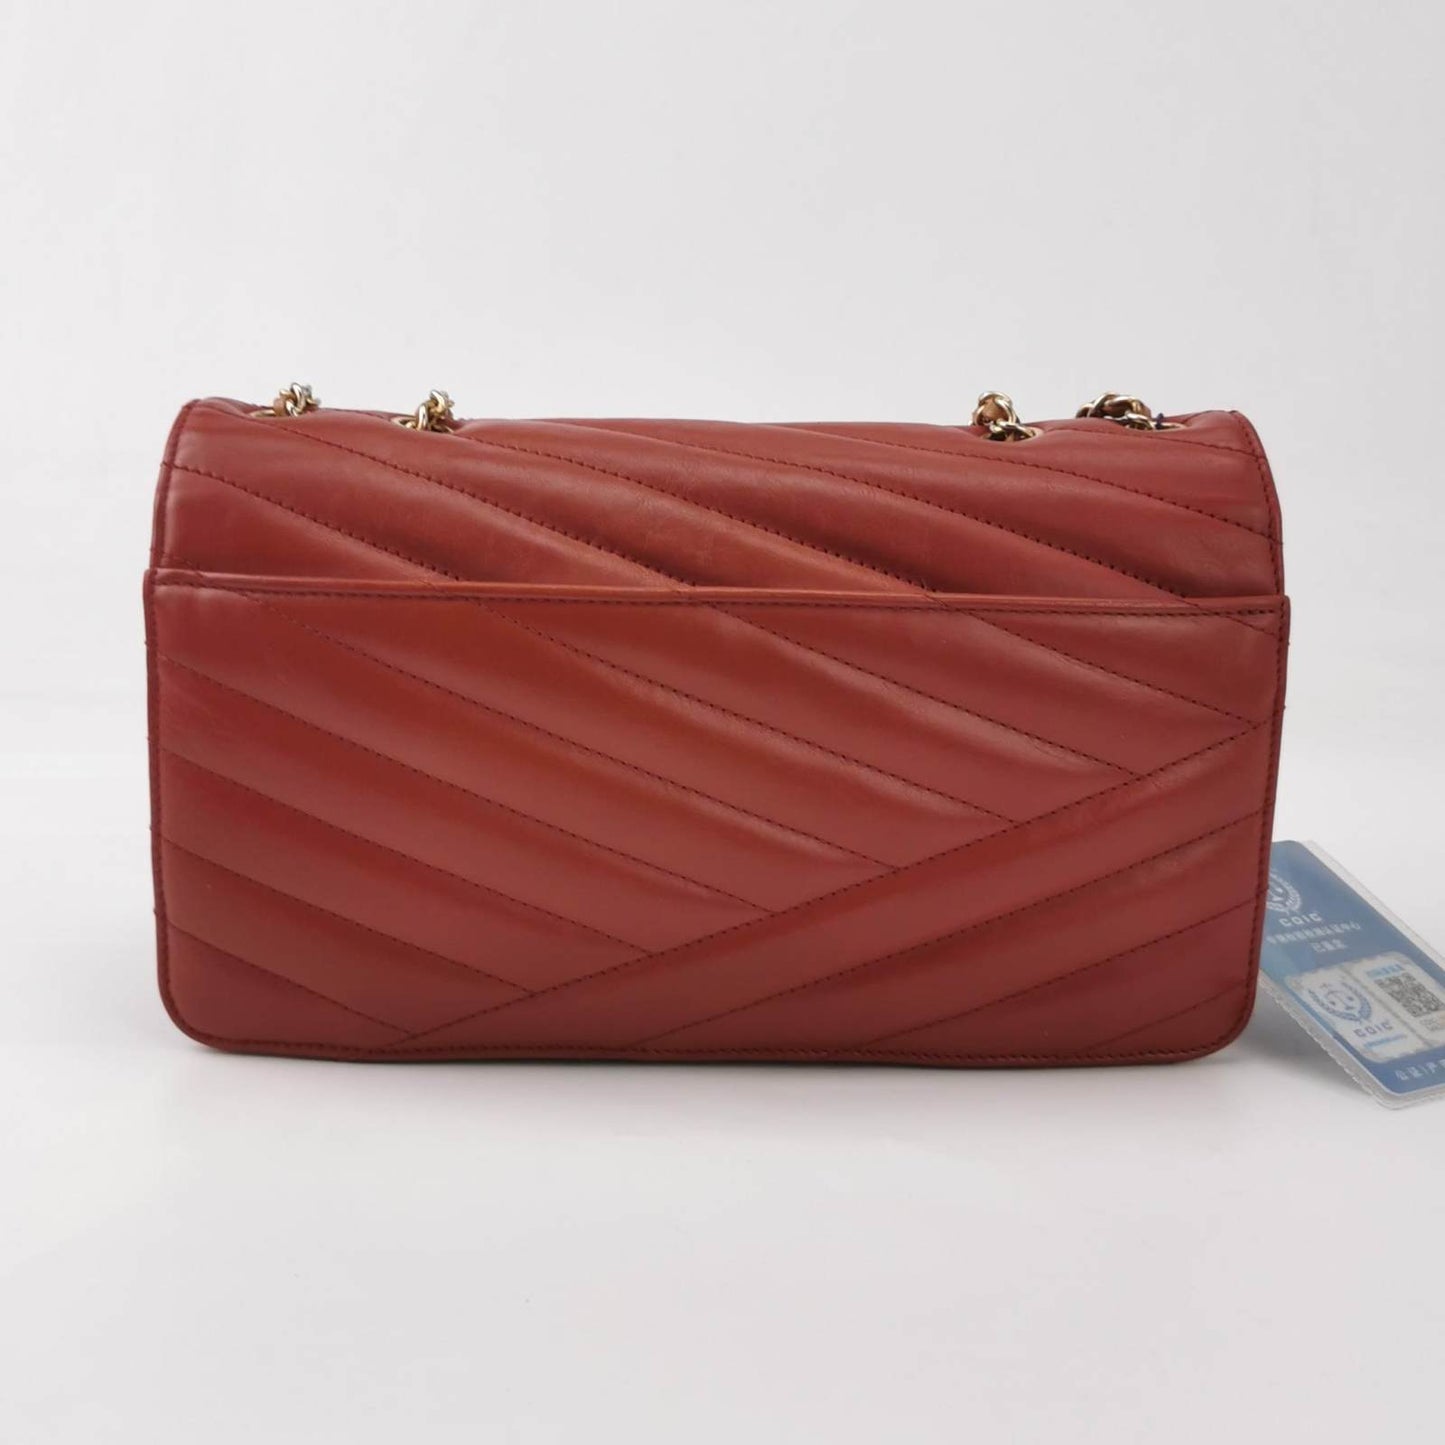 Chanel Gabrielle Flap Bag 2011-2012 Chevron Leather Medium Red Shoulder Bag